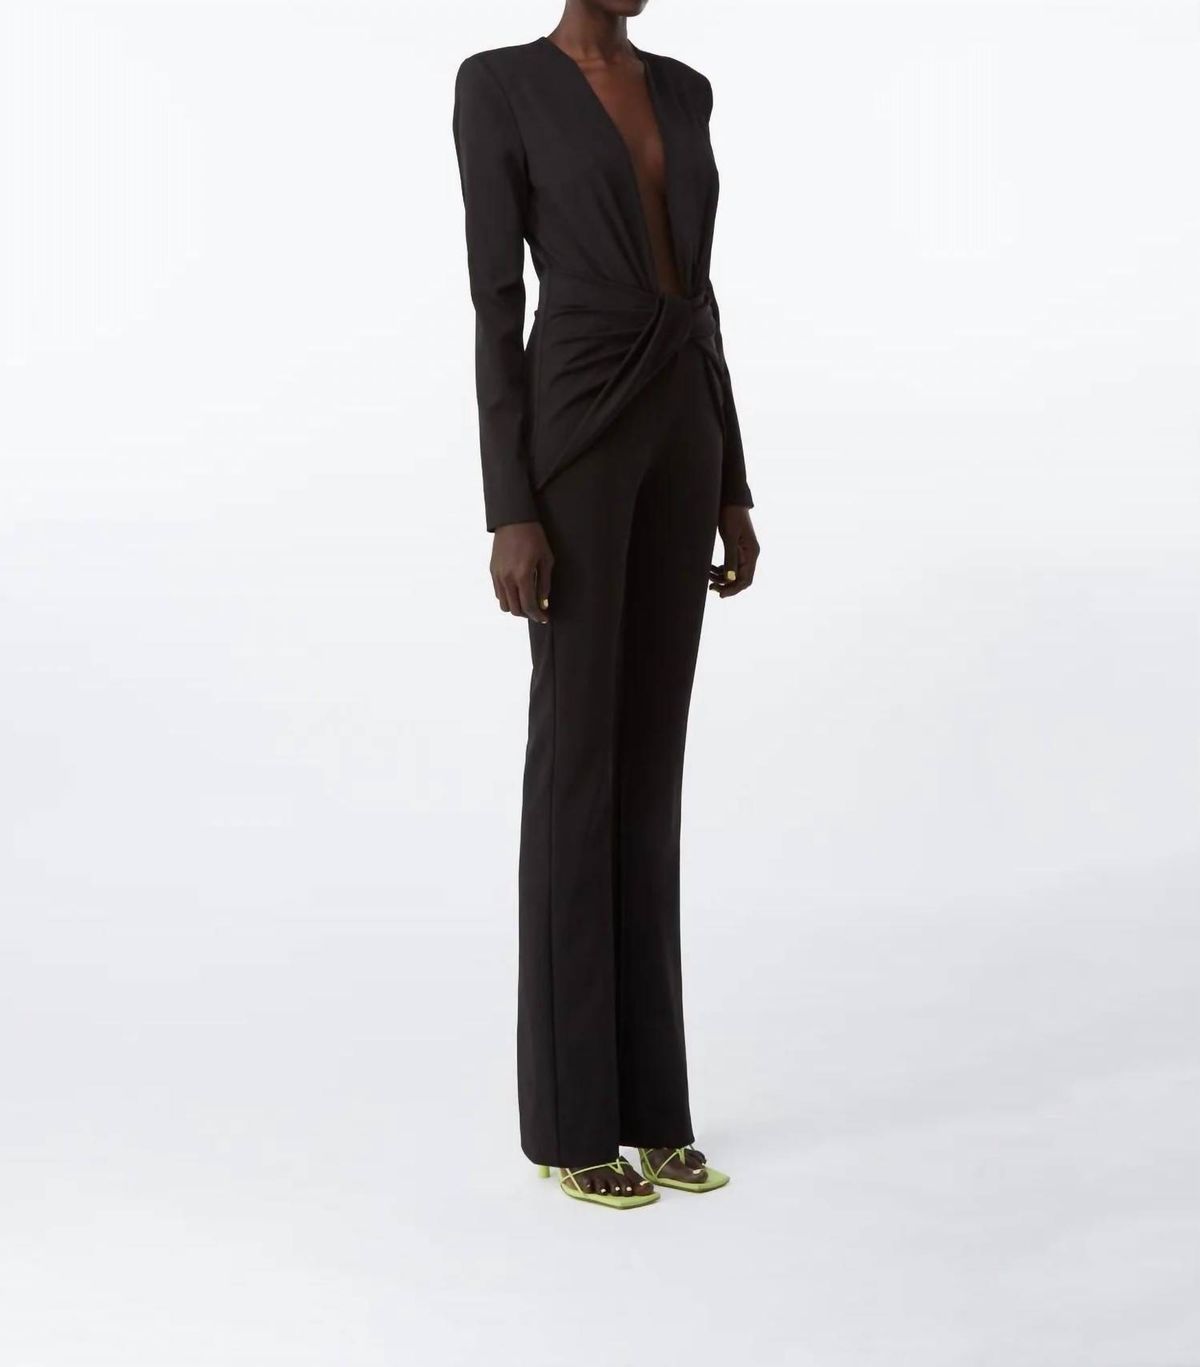 Style 1-3467363907-1231 GAUGE 81 Plus Size 36 Plunge Black Formal Jumpsuit on Queenly